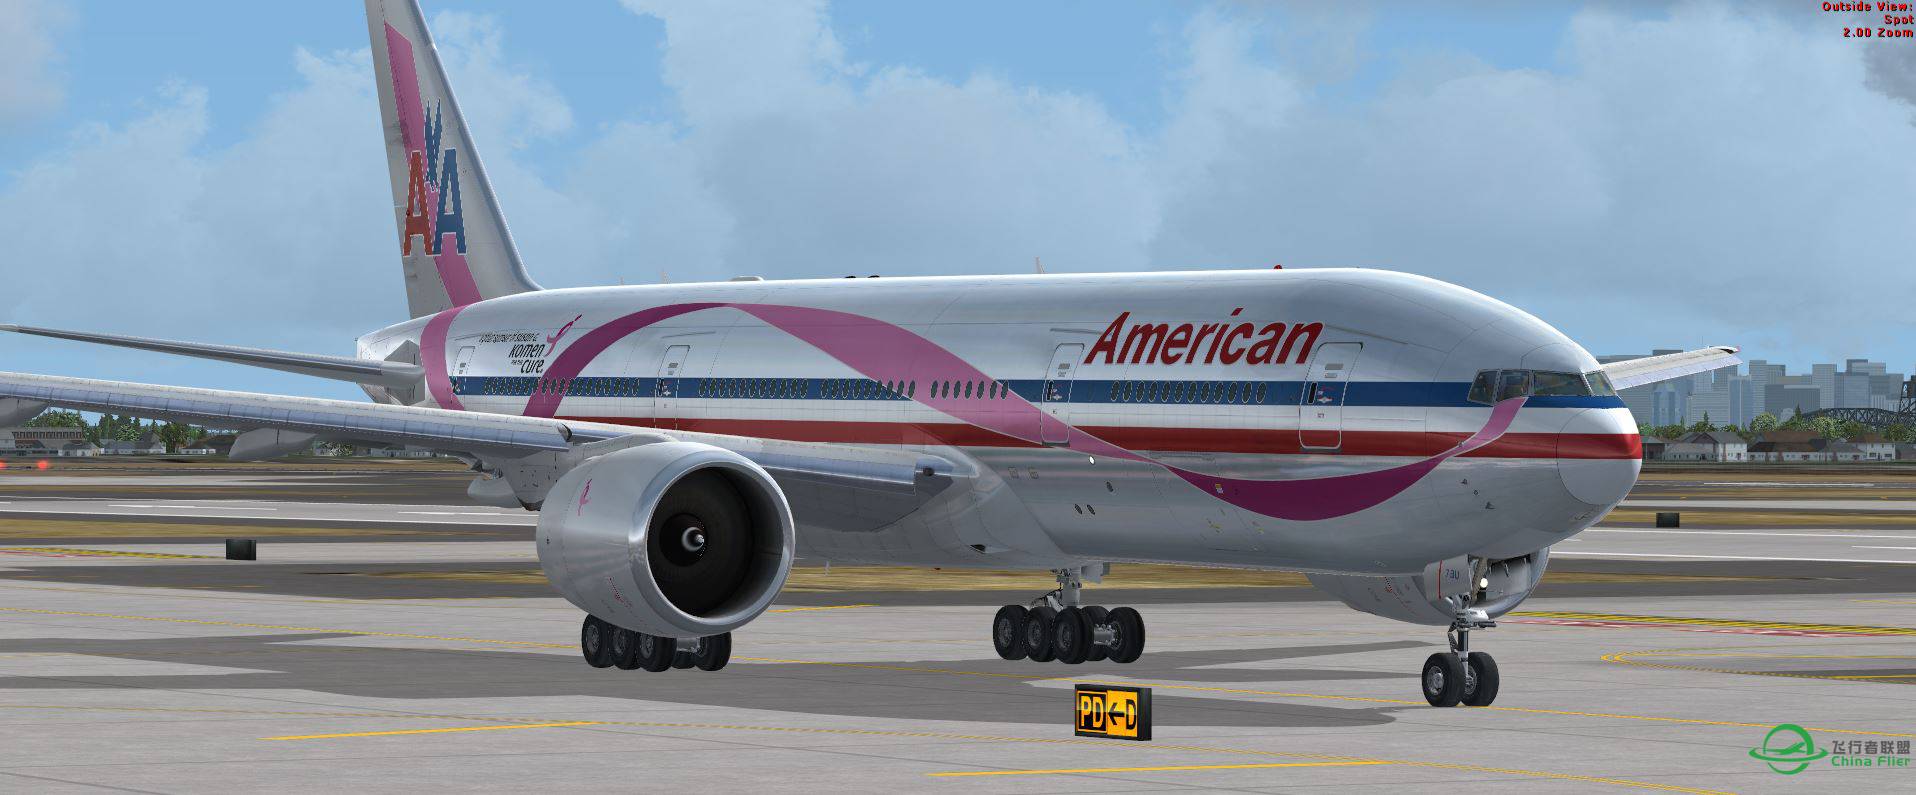 B777 American Airline-1417 